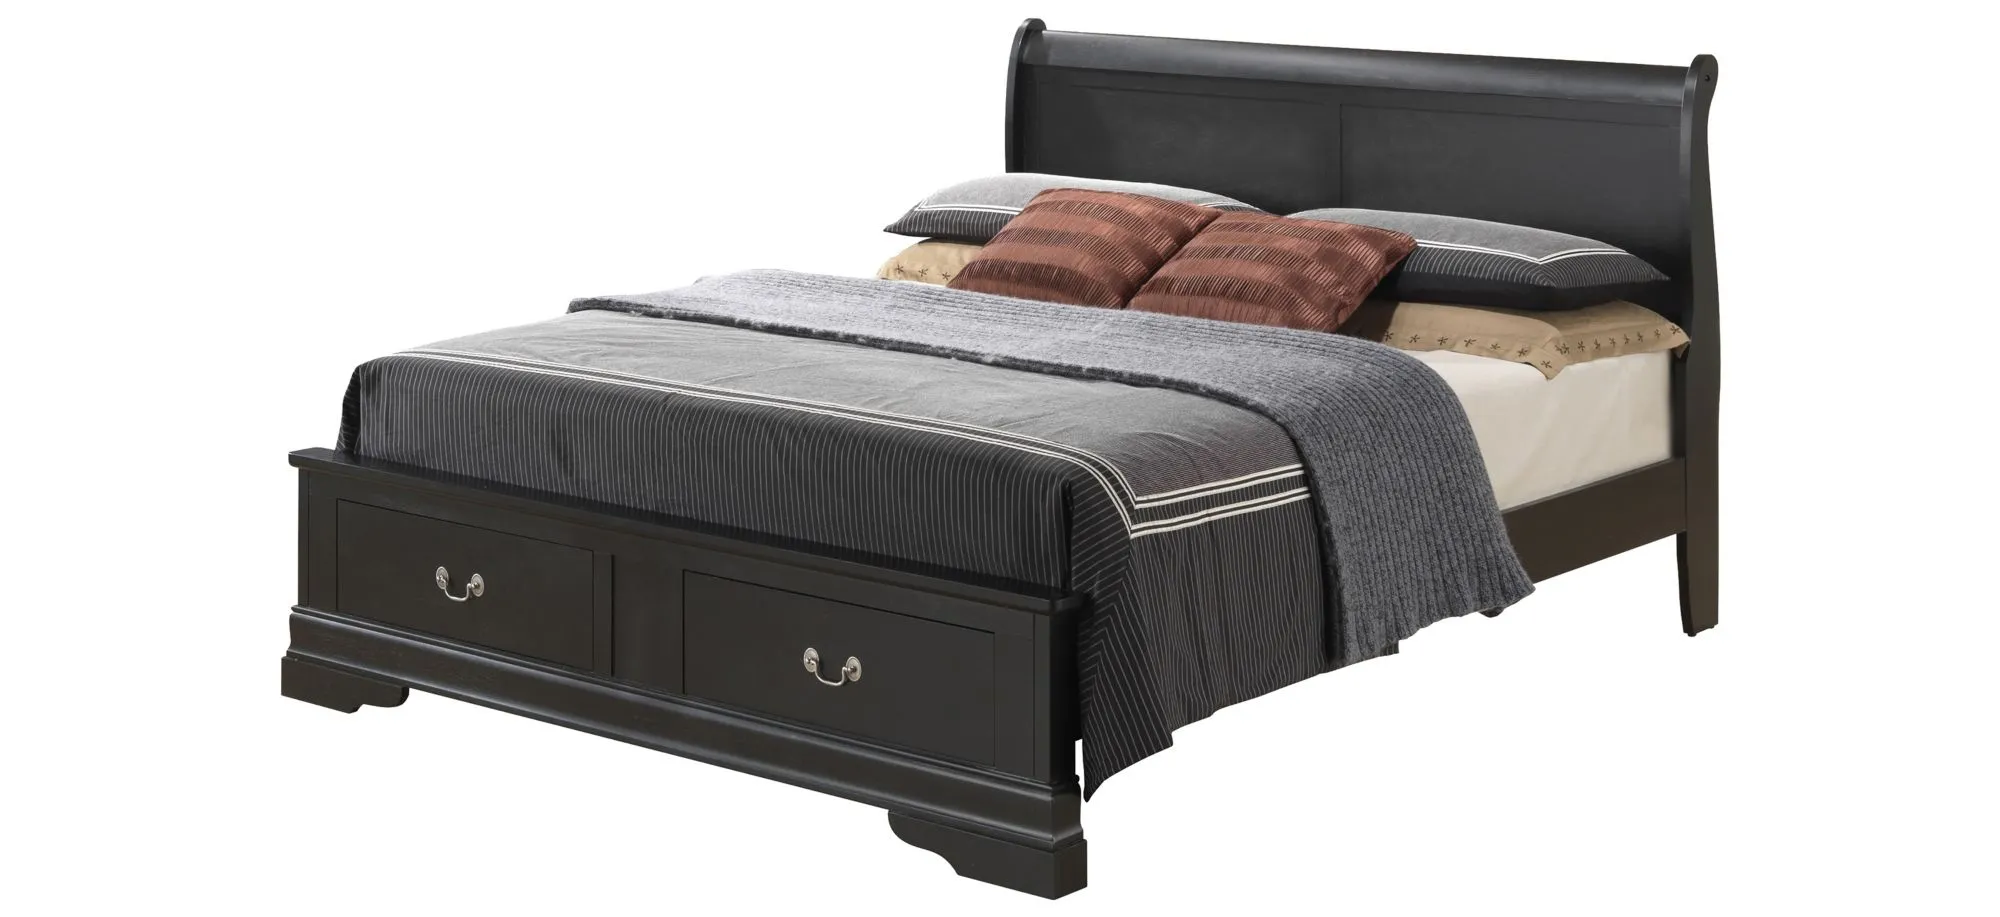 Rossie Storage Bed in Black by Glory Furniture